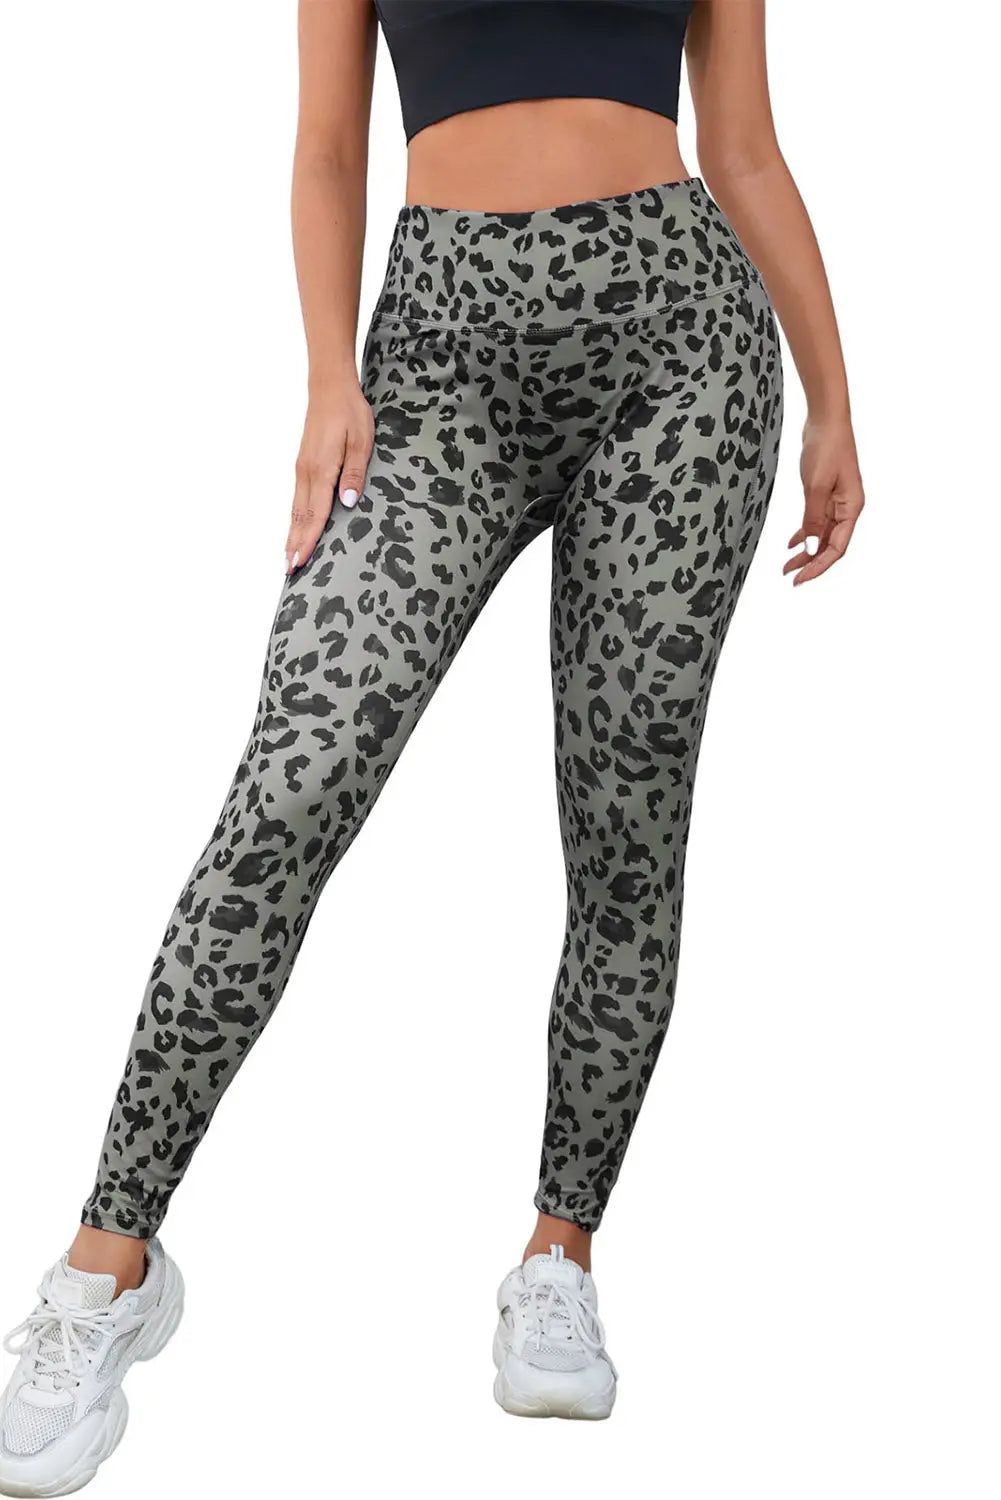 Gray classic leopard print active leggings